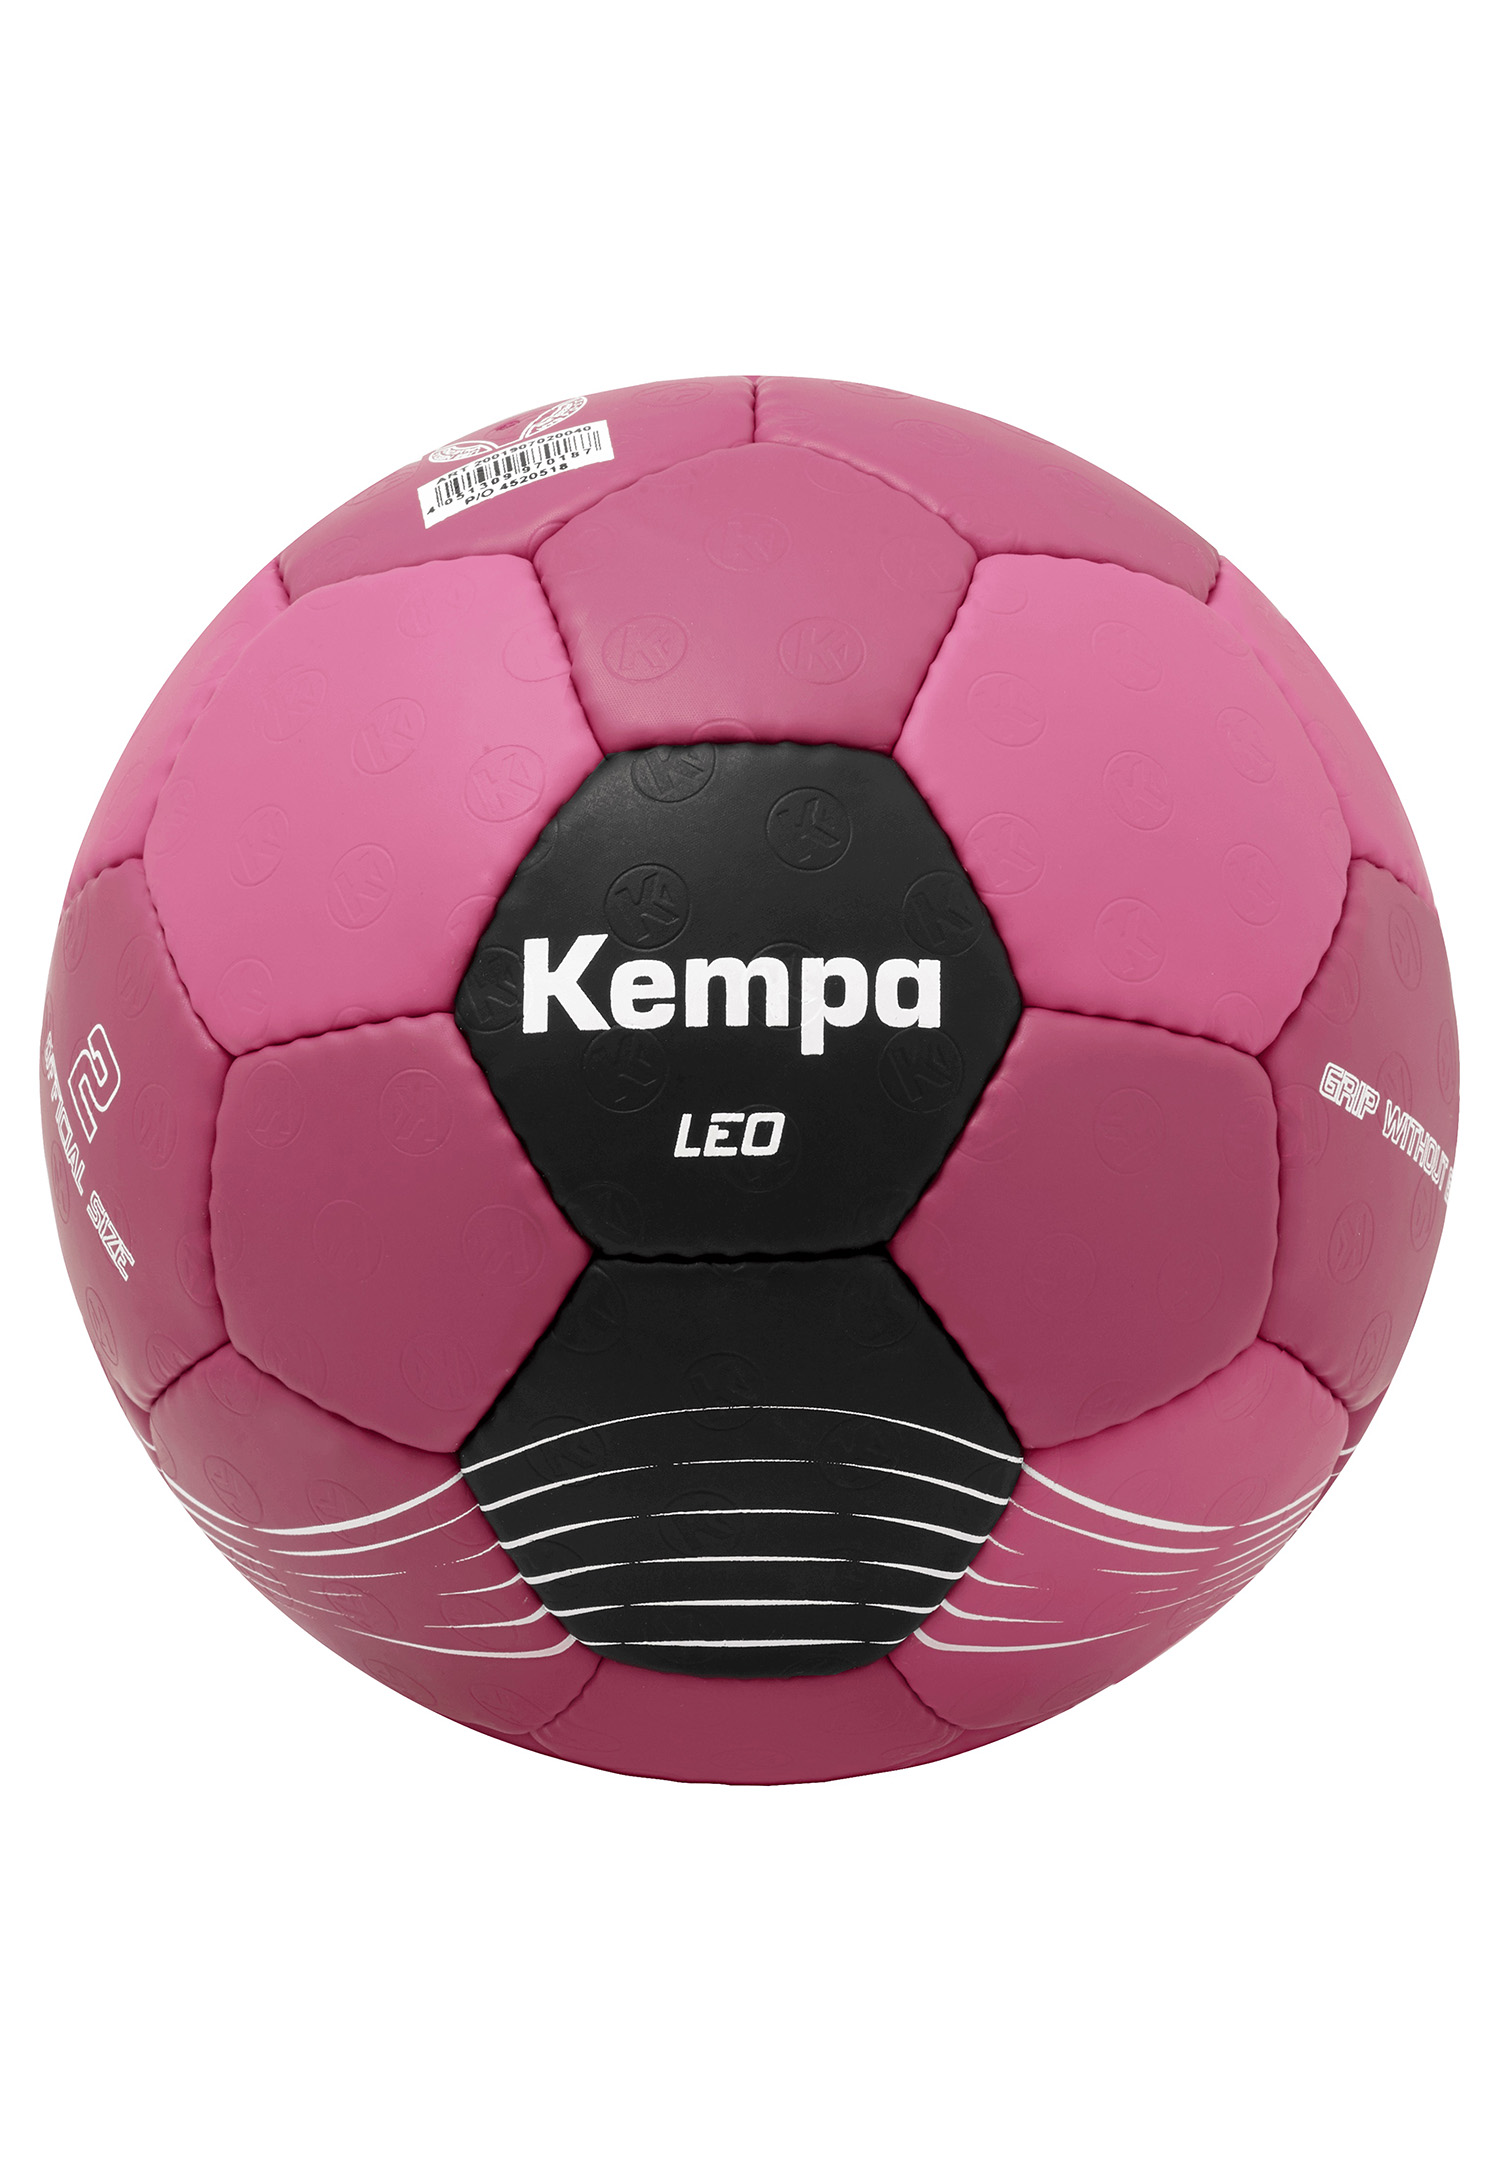 Kempa Handball Leo Size 2 200190702 burgundy/black